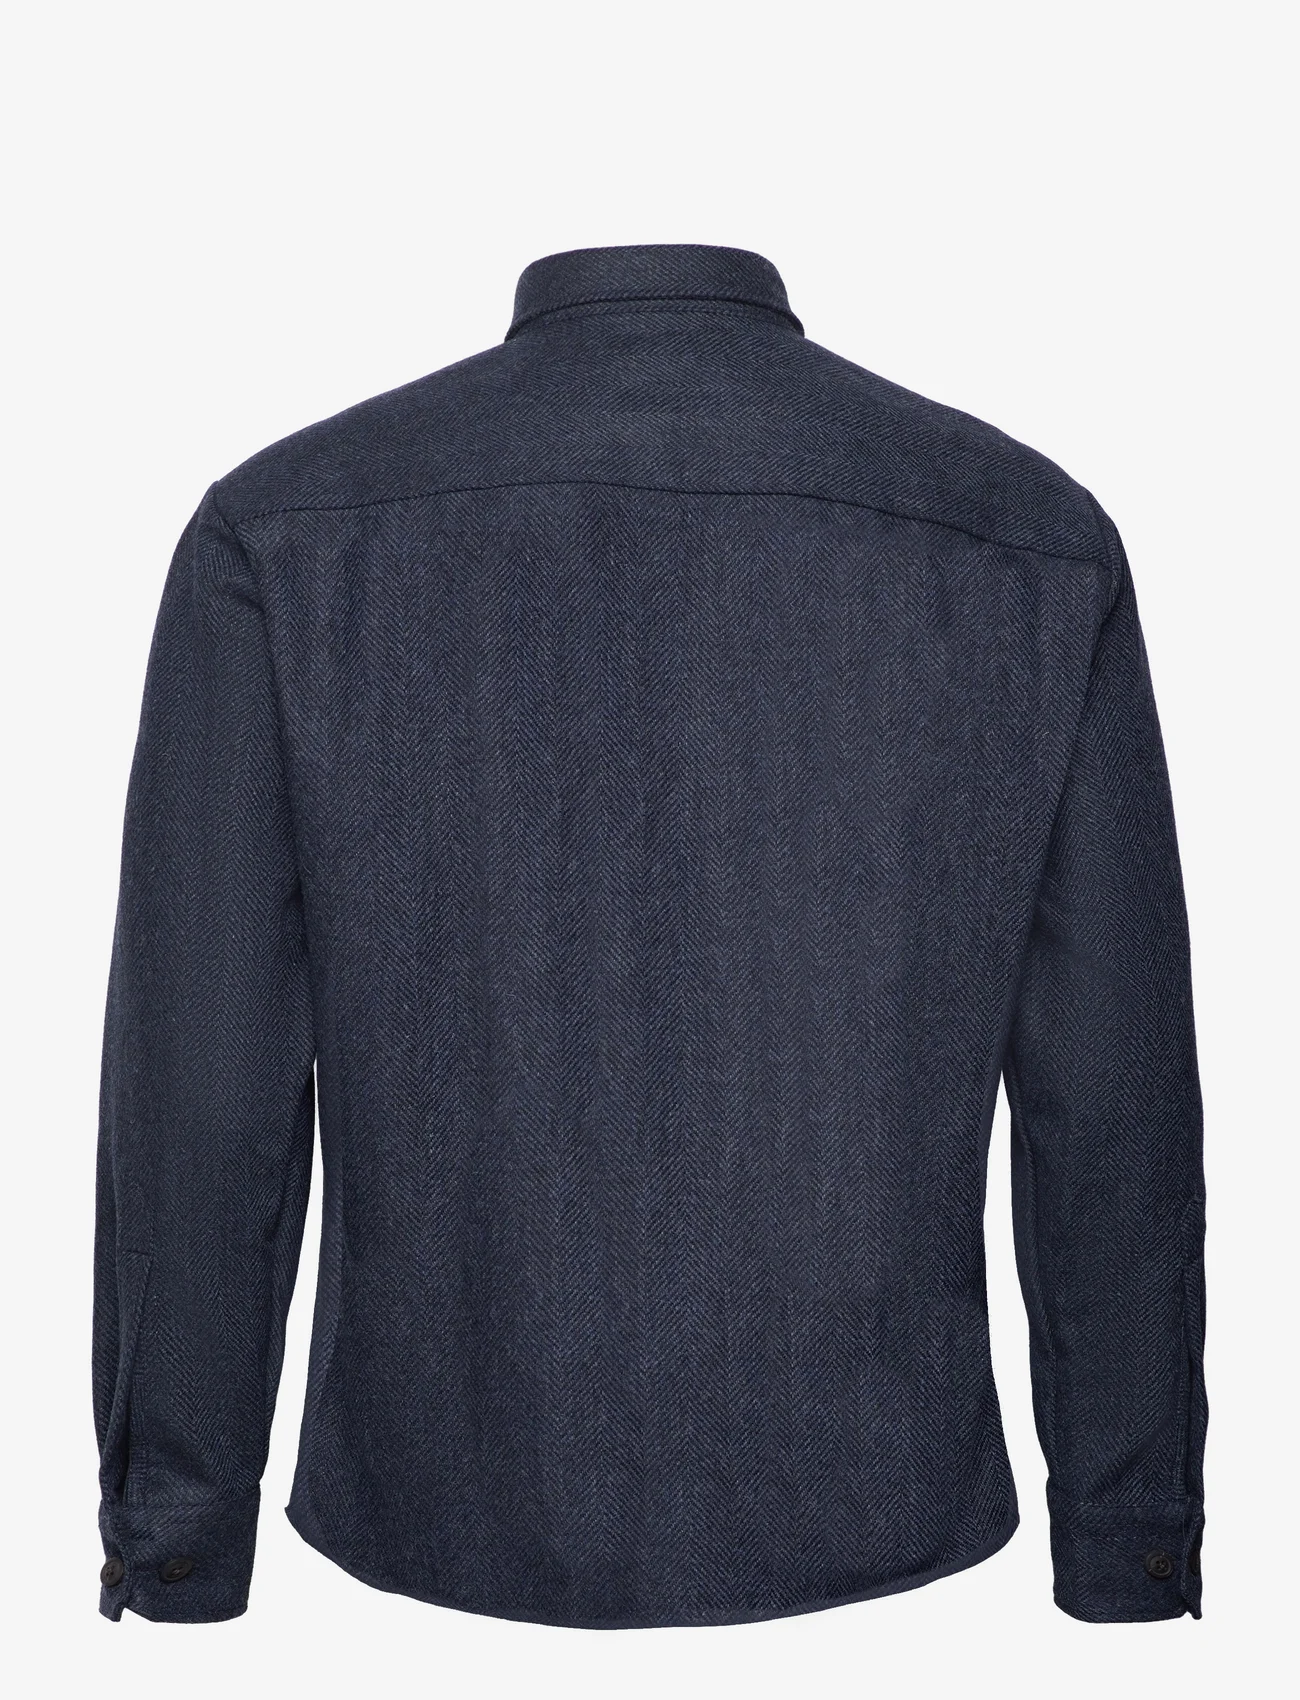 Bosweel Shirts Est. 1937 - Over Shirt - herren - dark blue - 1